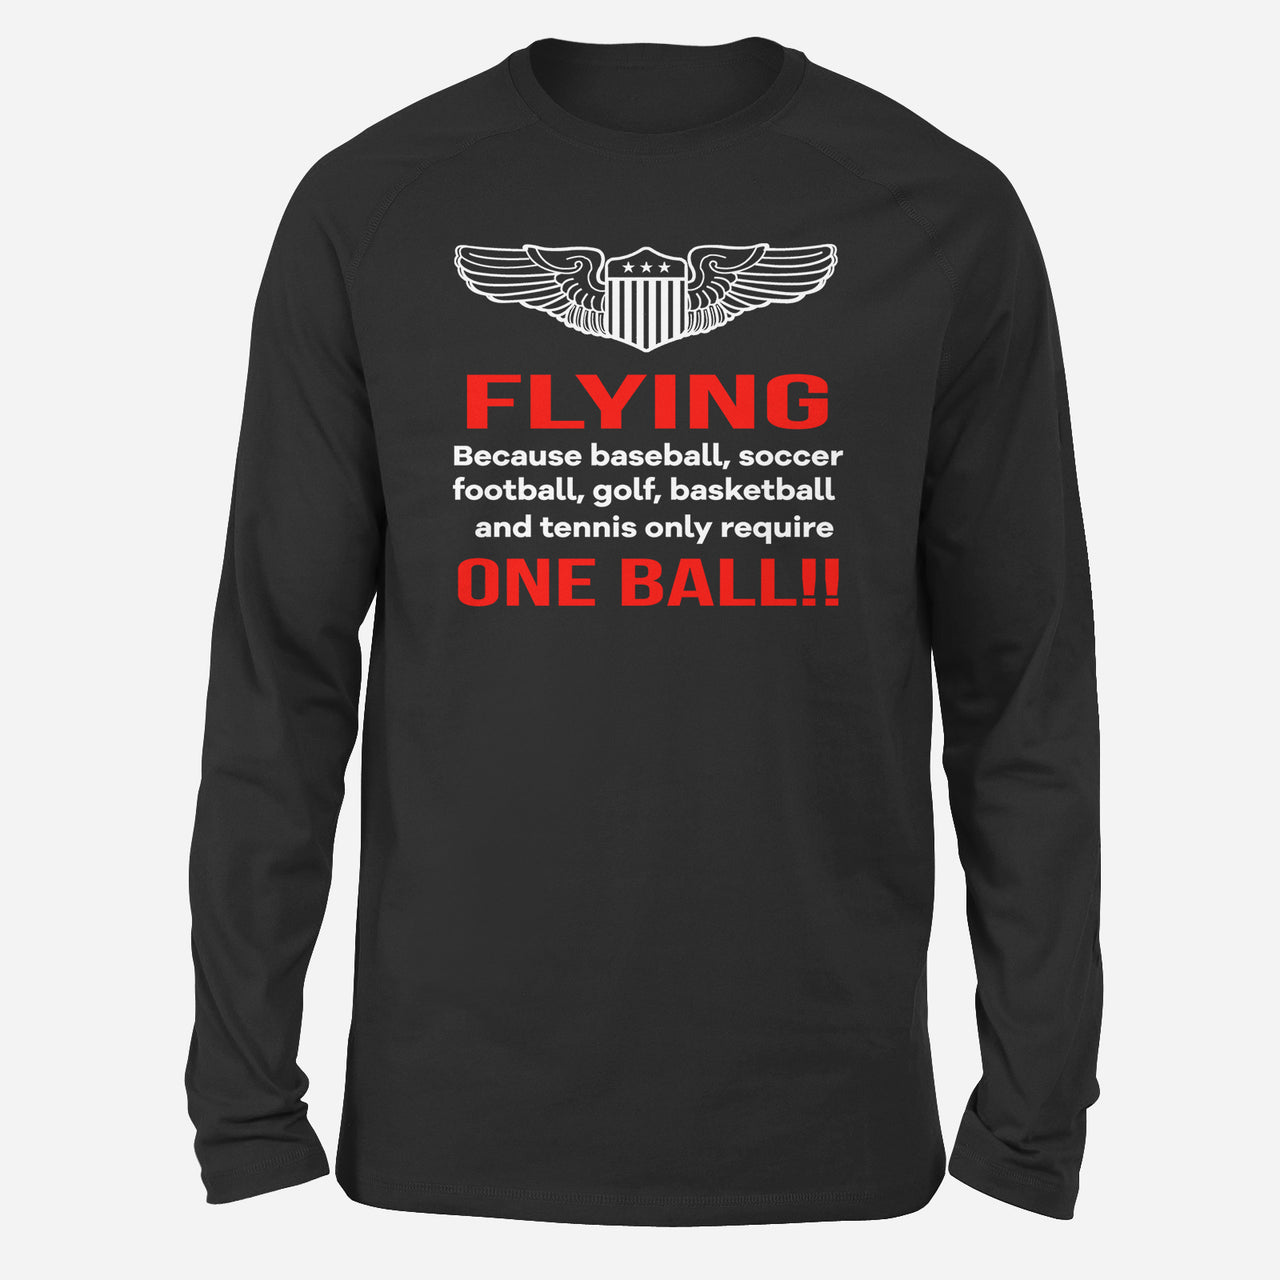 Flying One Ball Designed Long-Sleeve T-Shirts